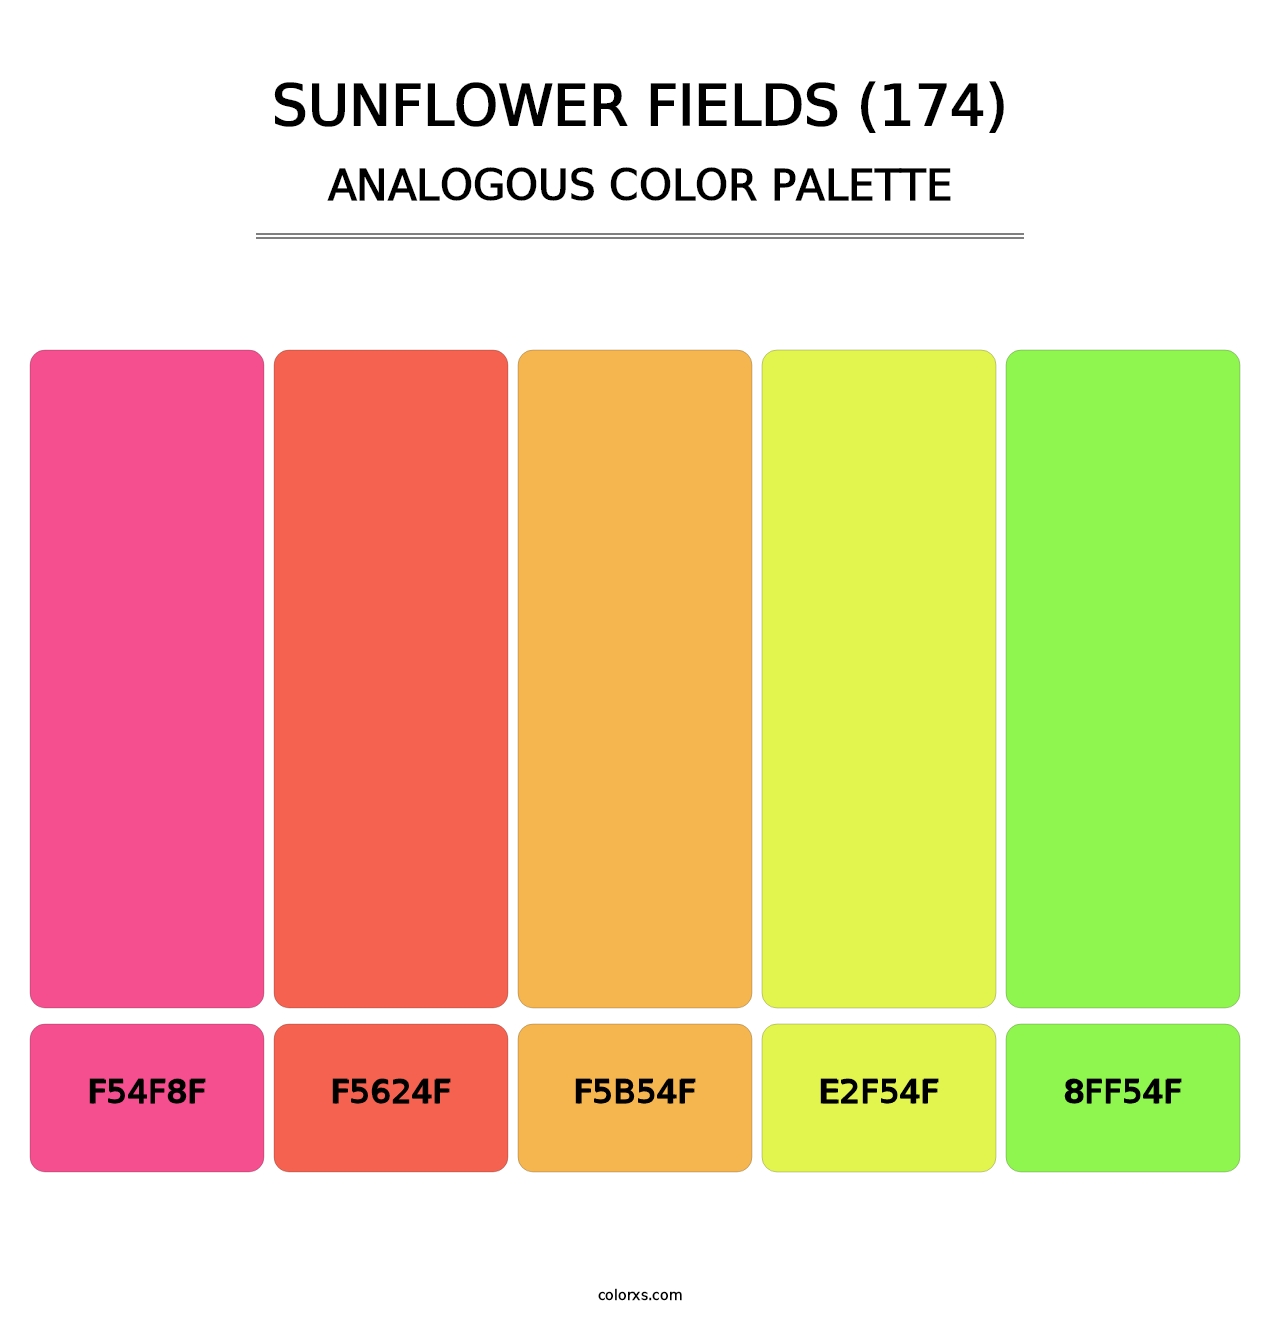 Sunflower Fields (174) - Analogous Color Palette